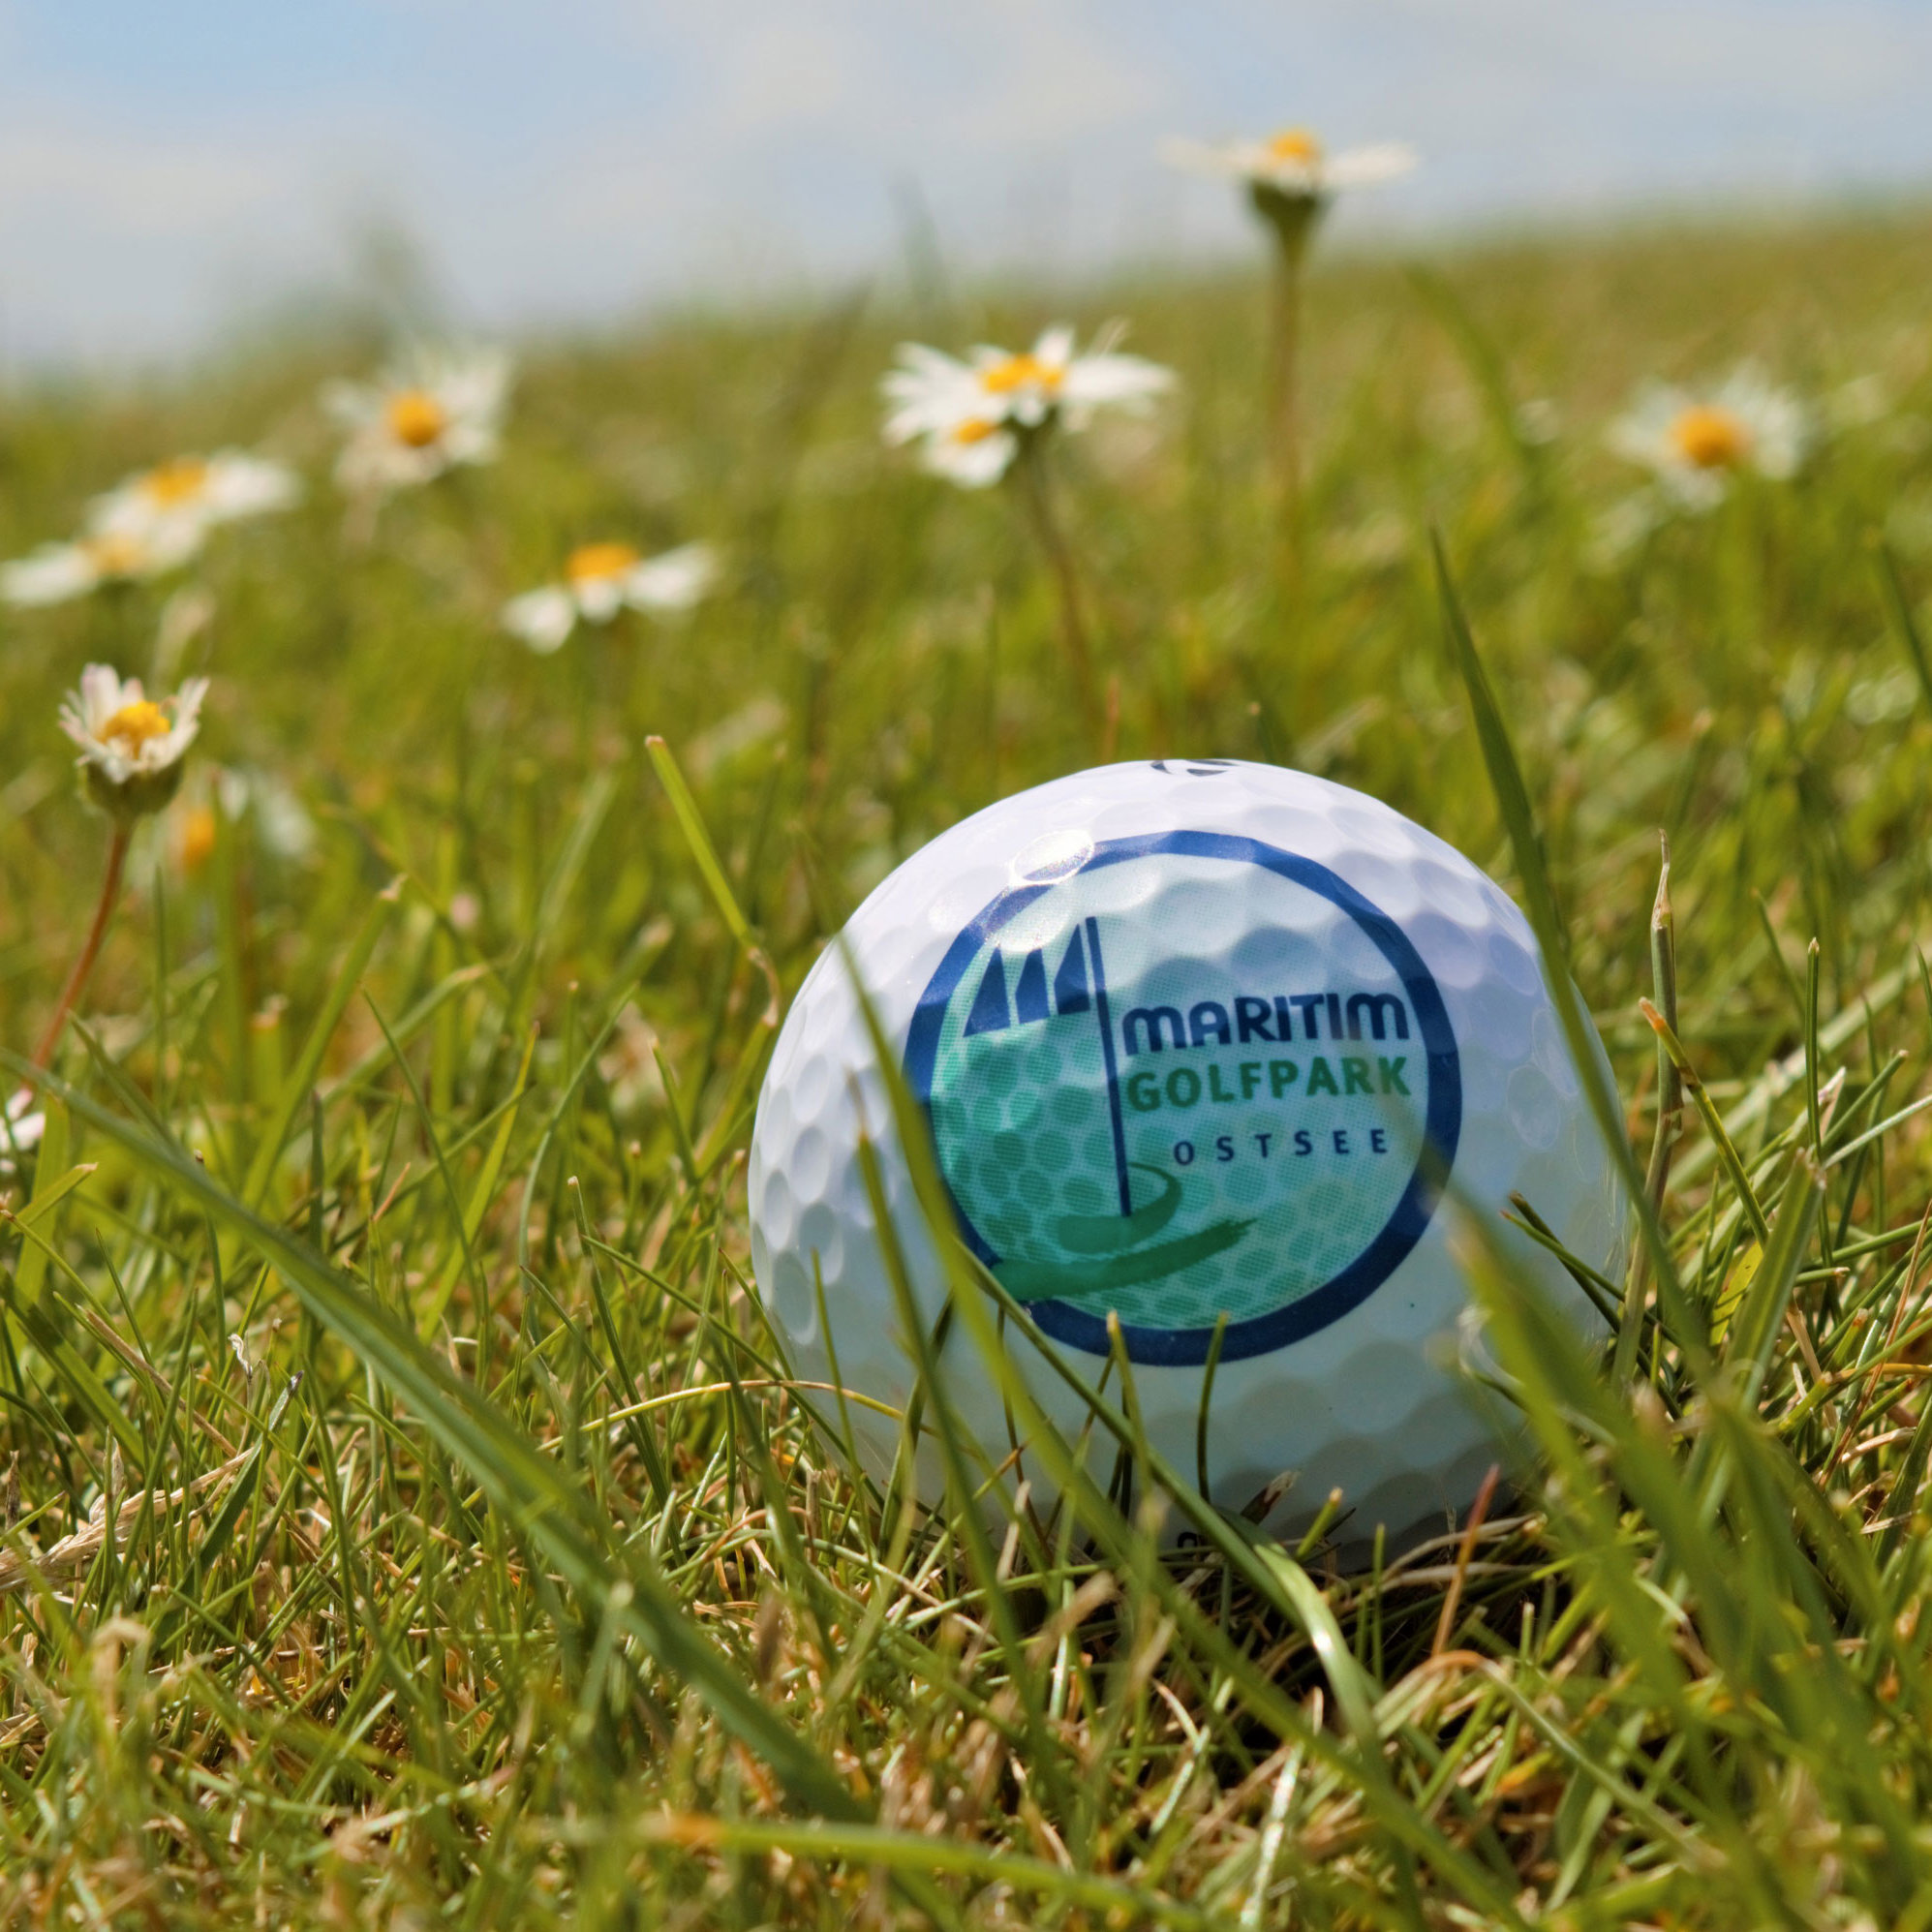 Golfball | Maritim Golfpark Ostsee